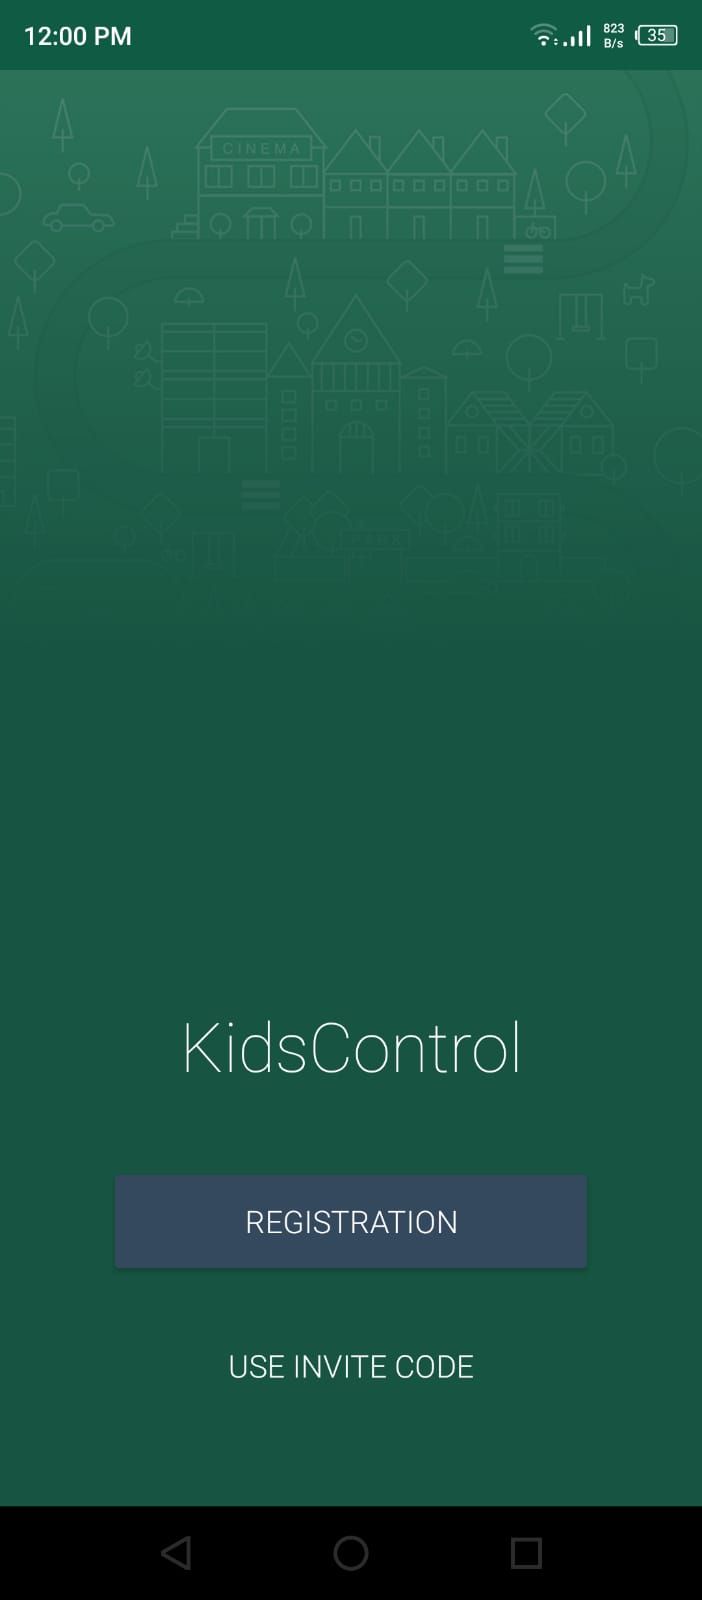 KidsControl - Get Started Page